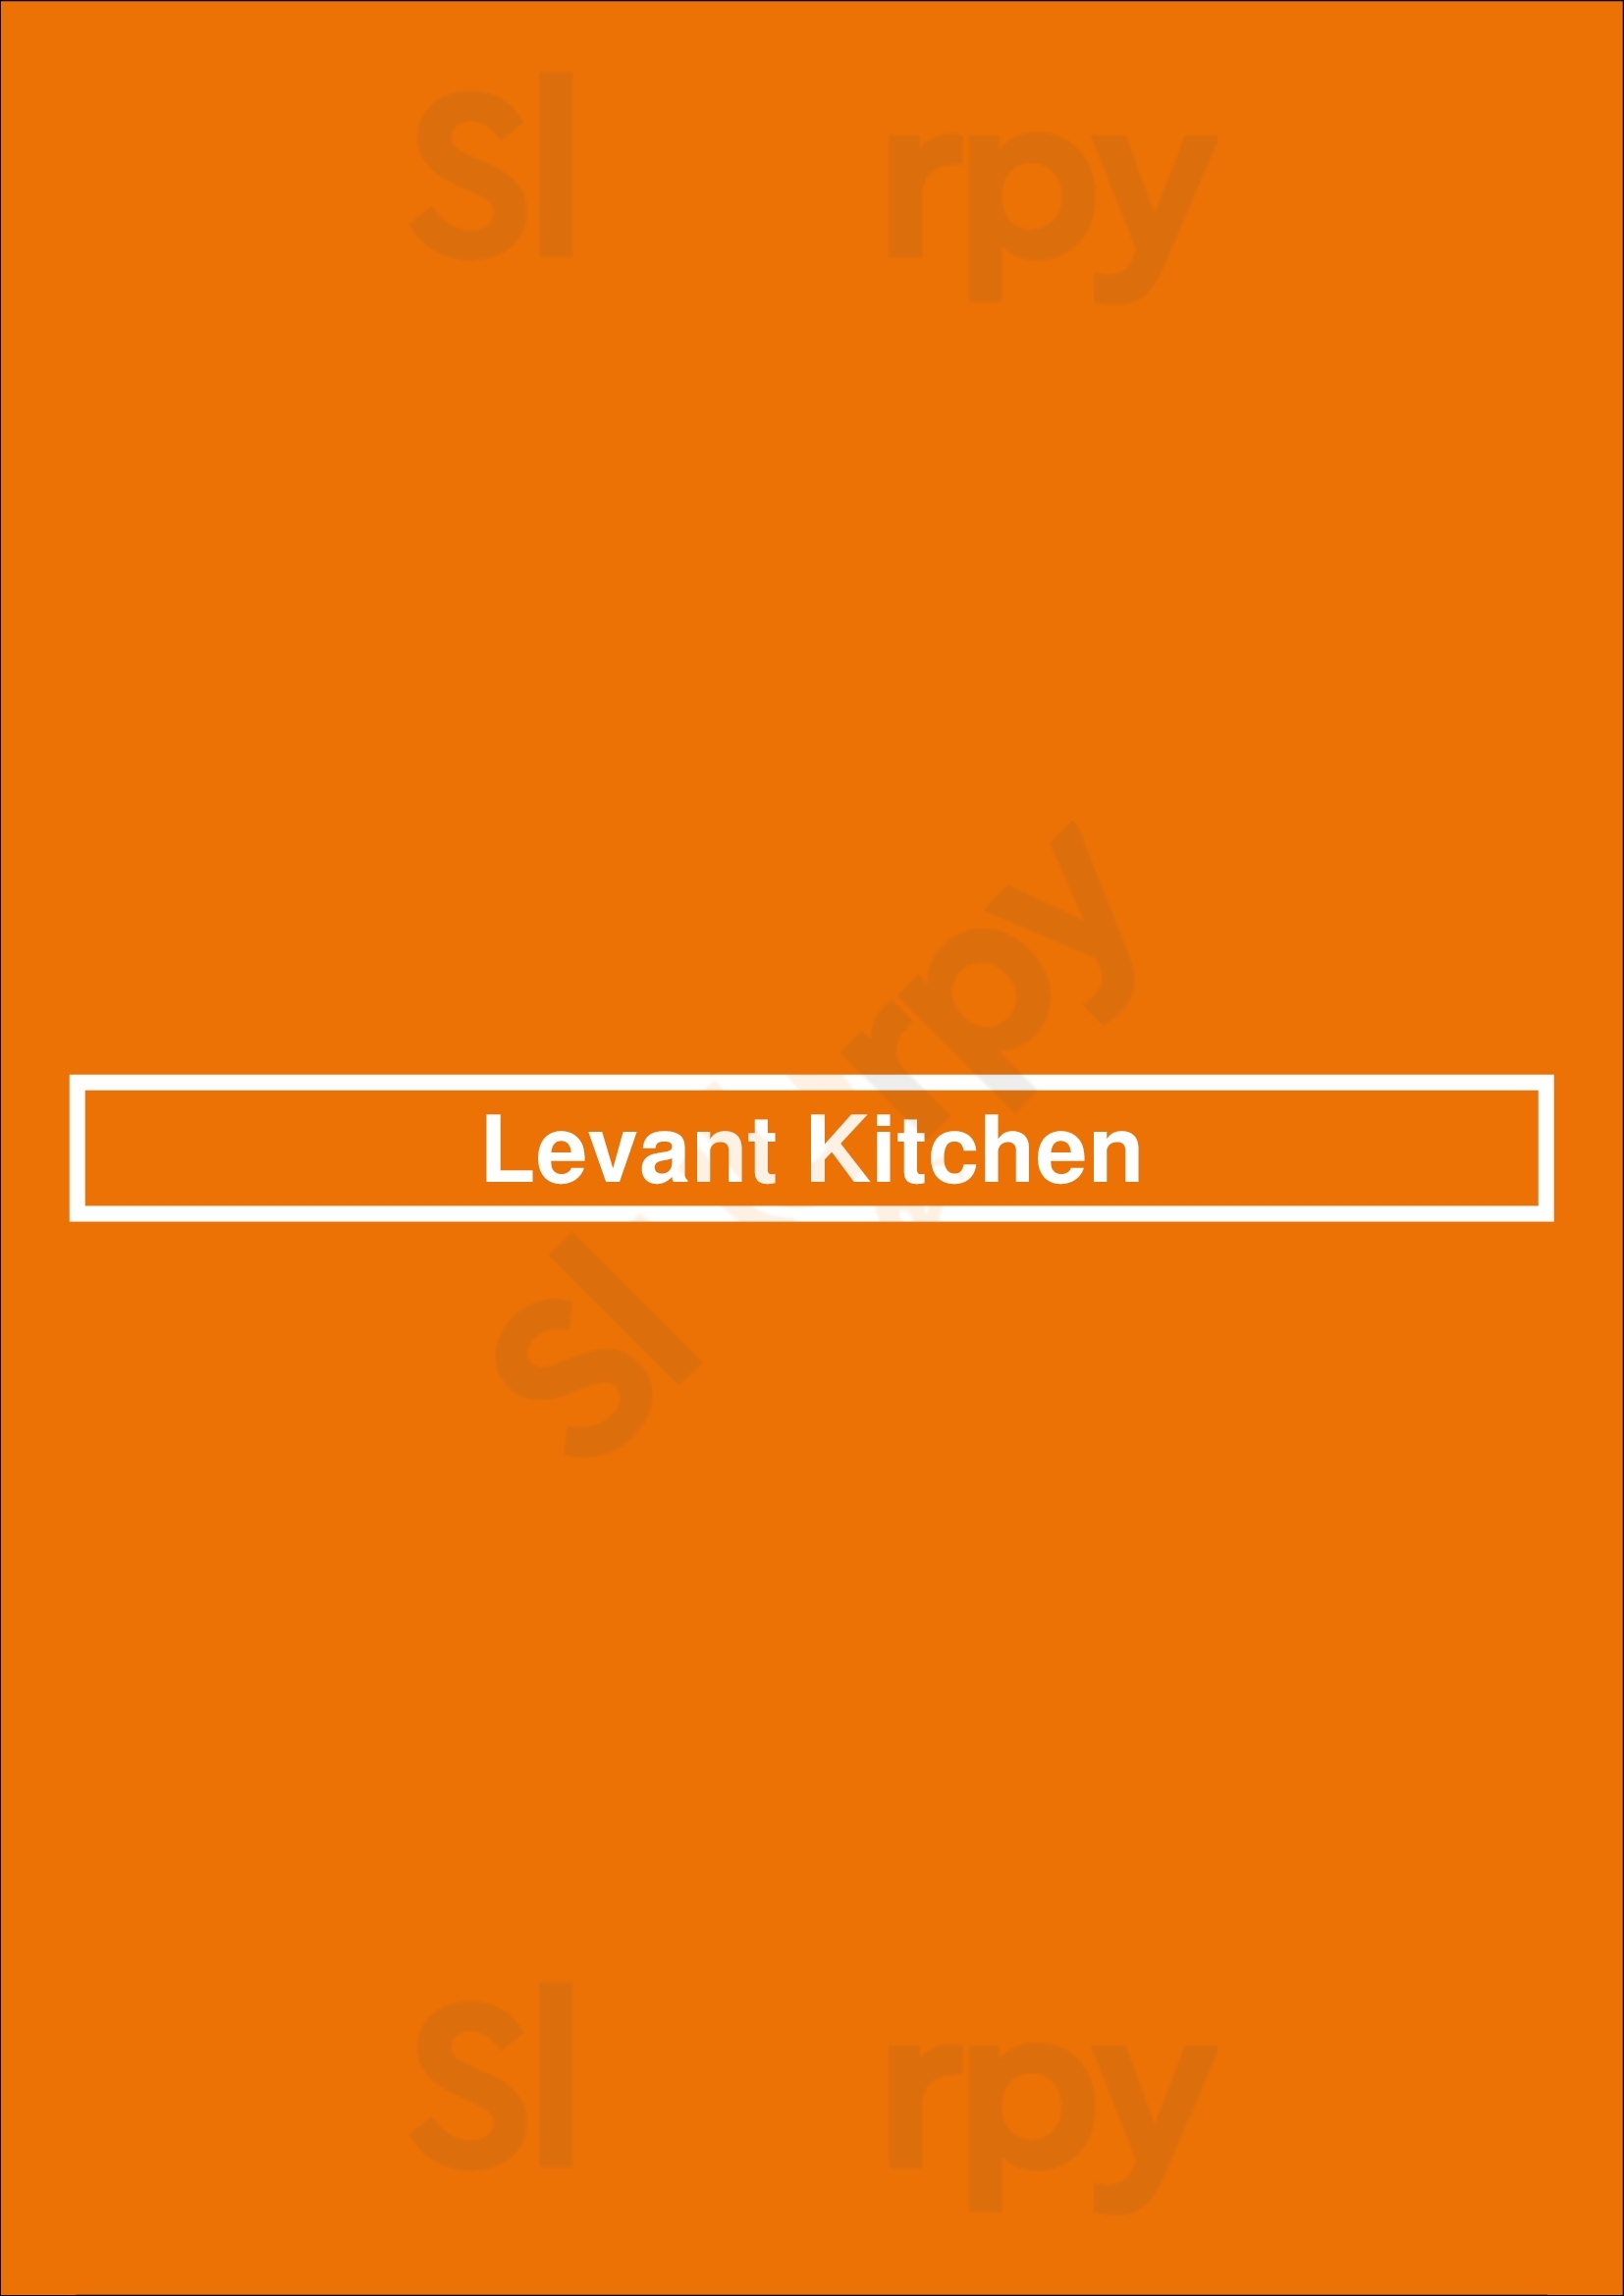 Levant Kitchen Canton Menu - 1